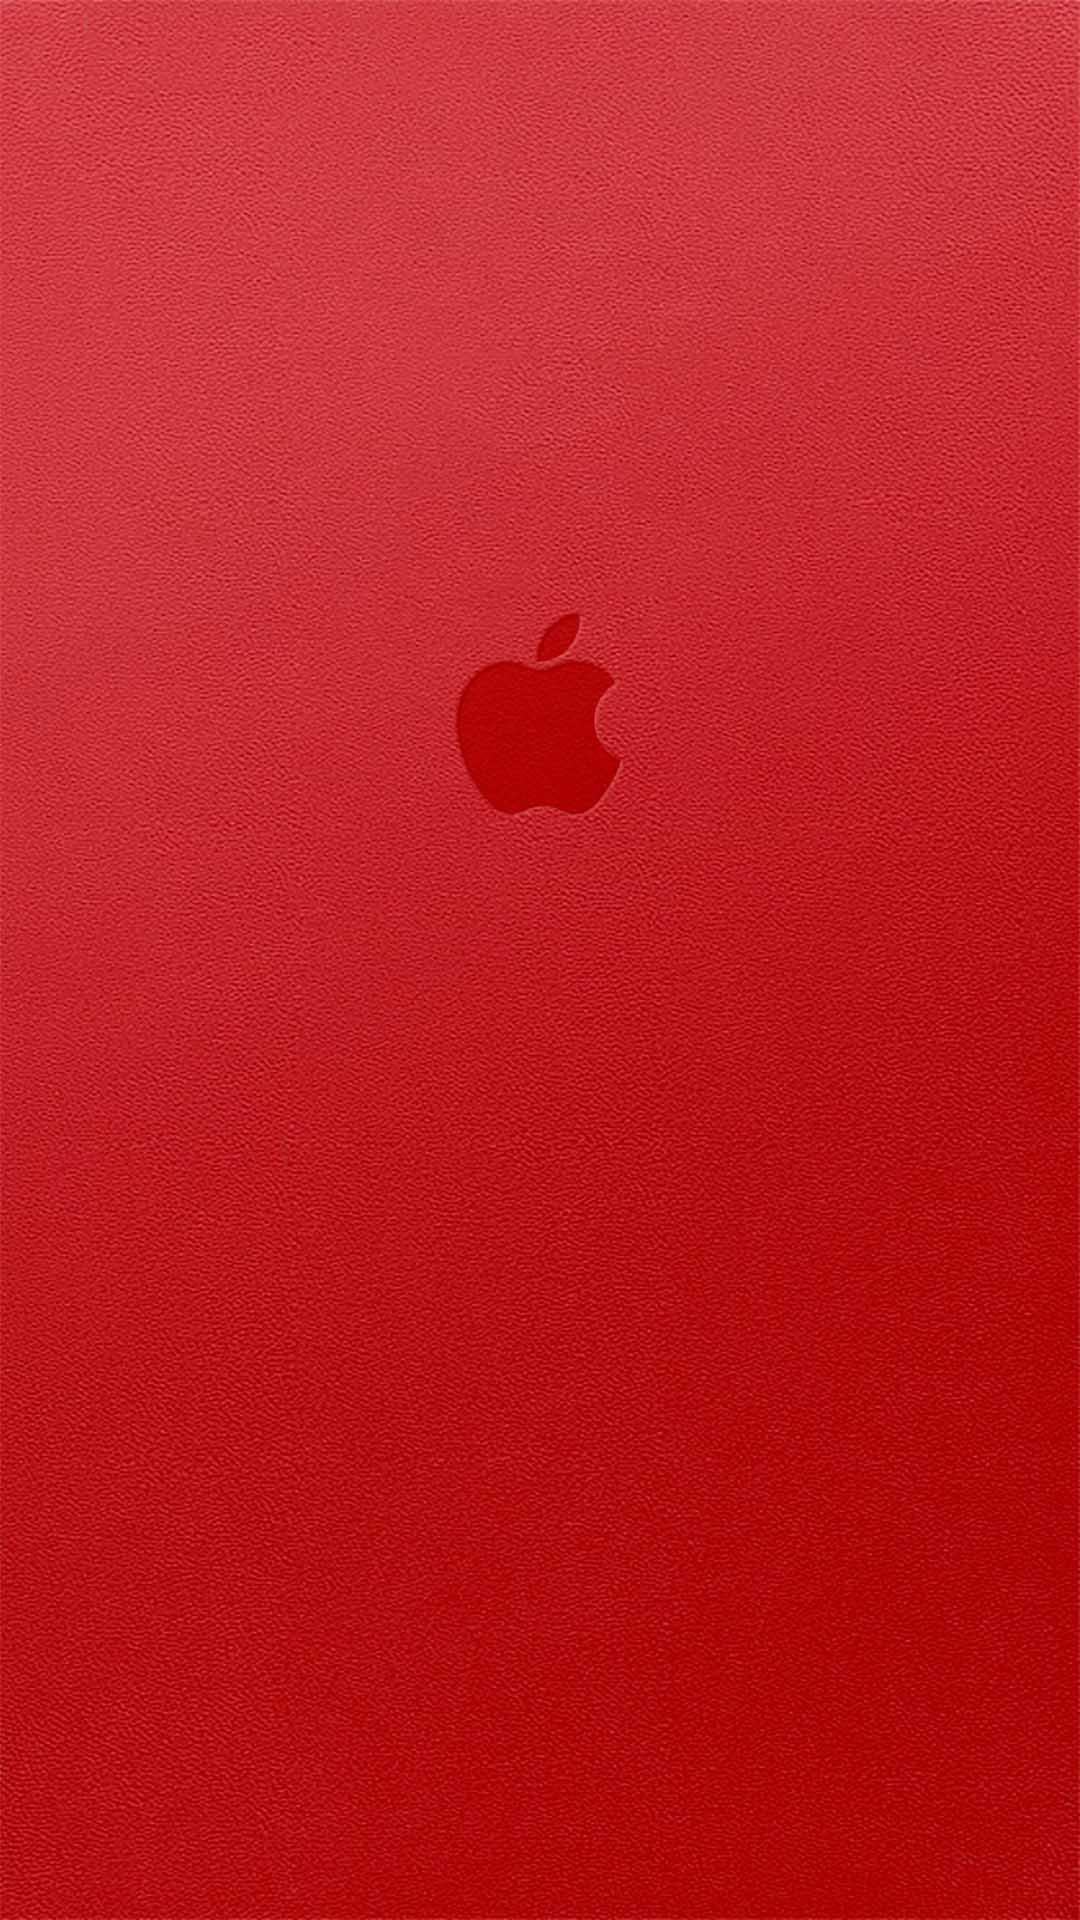 Iphone 7 Red Apple Logo Wallpaper